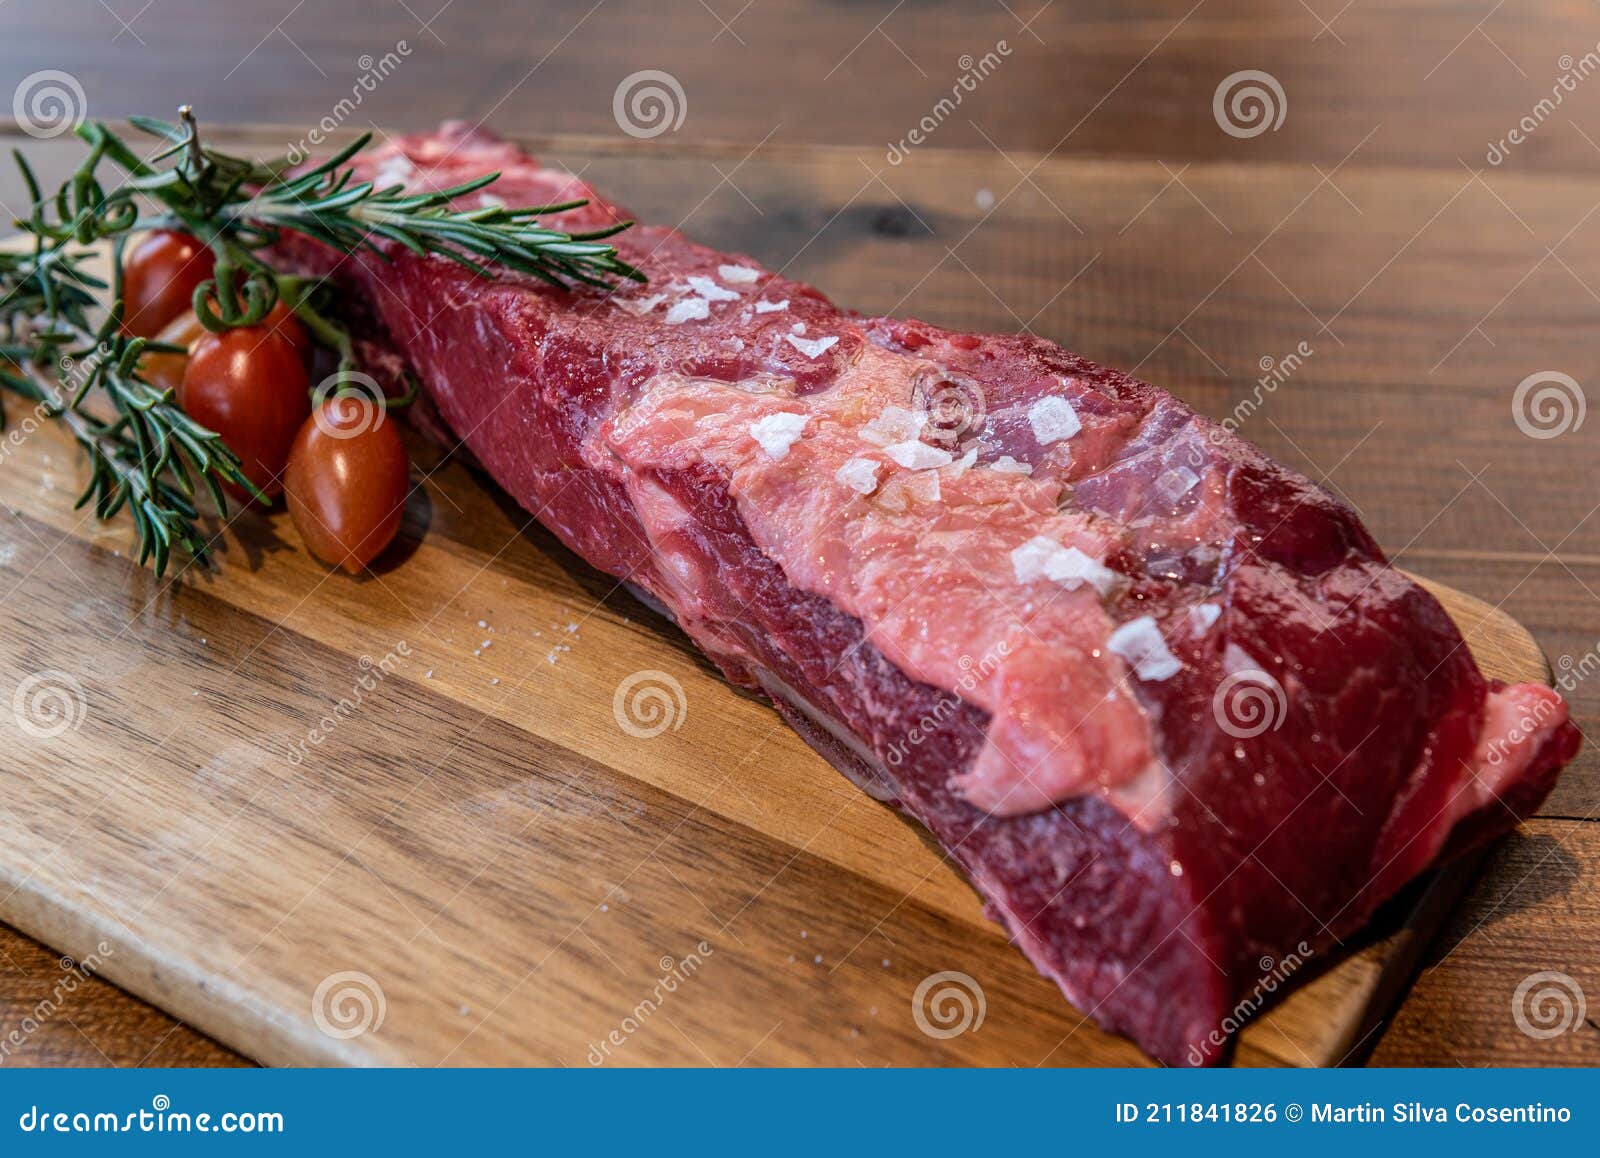 argentine cut of meat called vacio